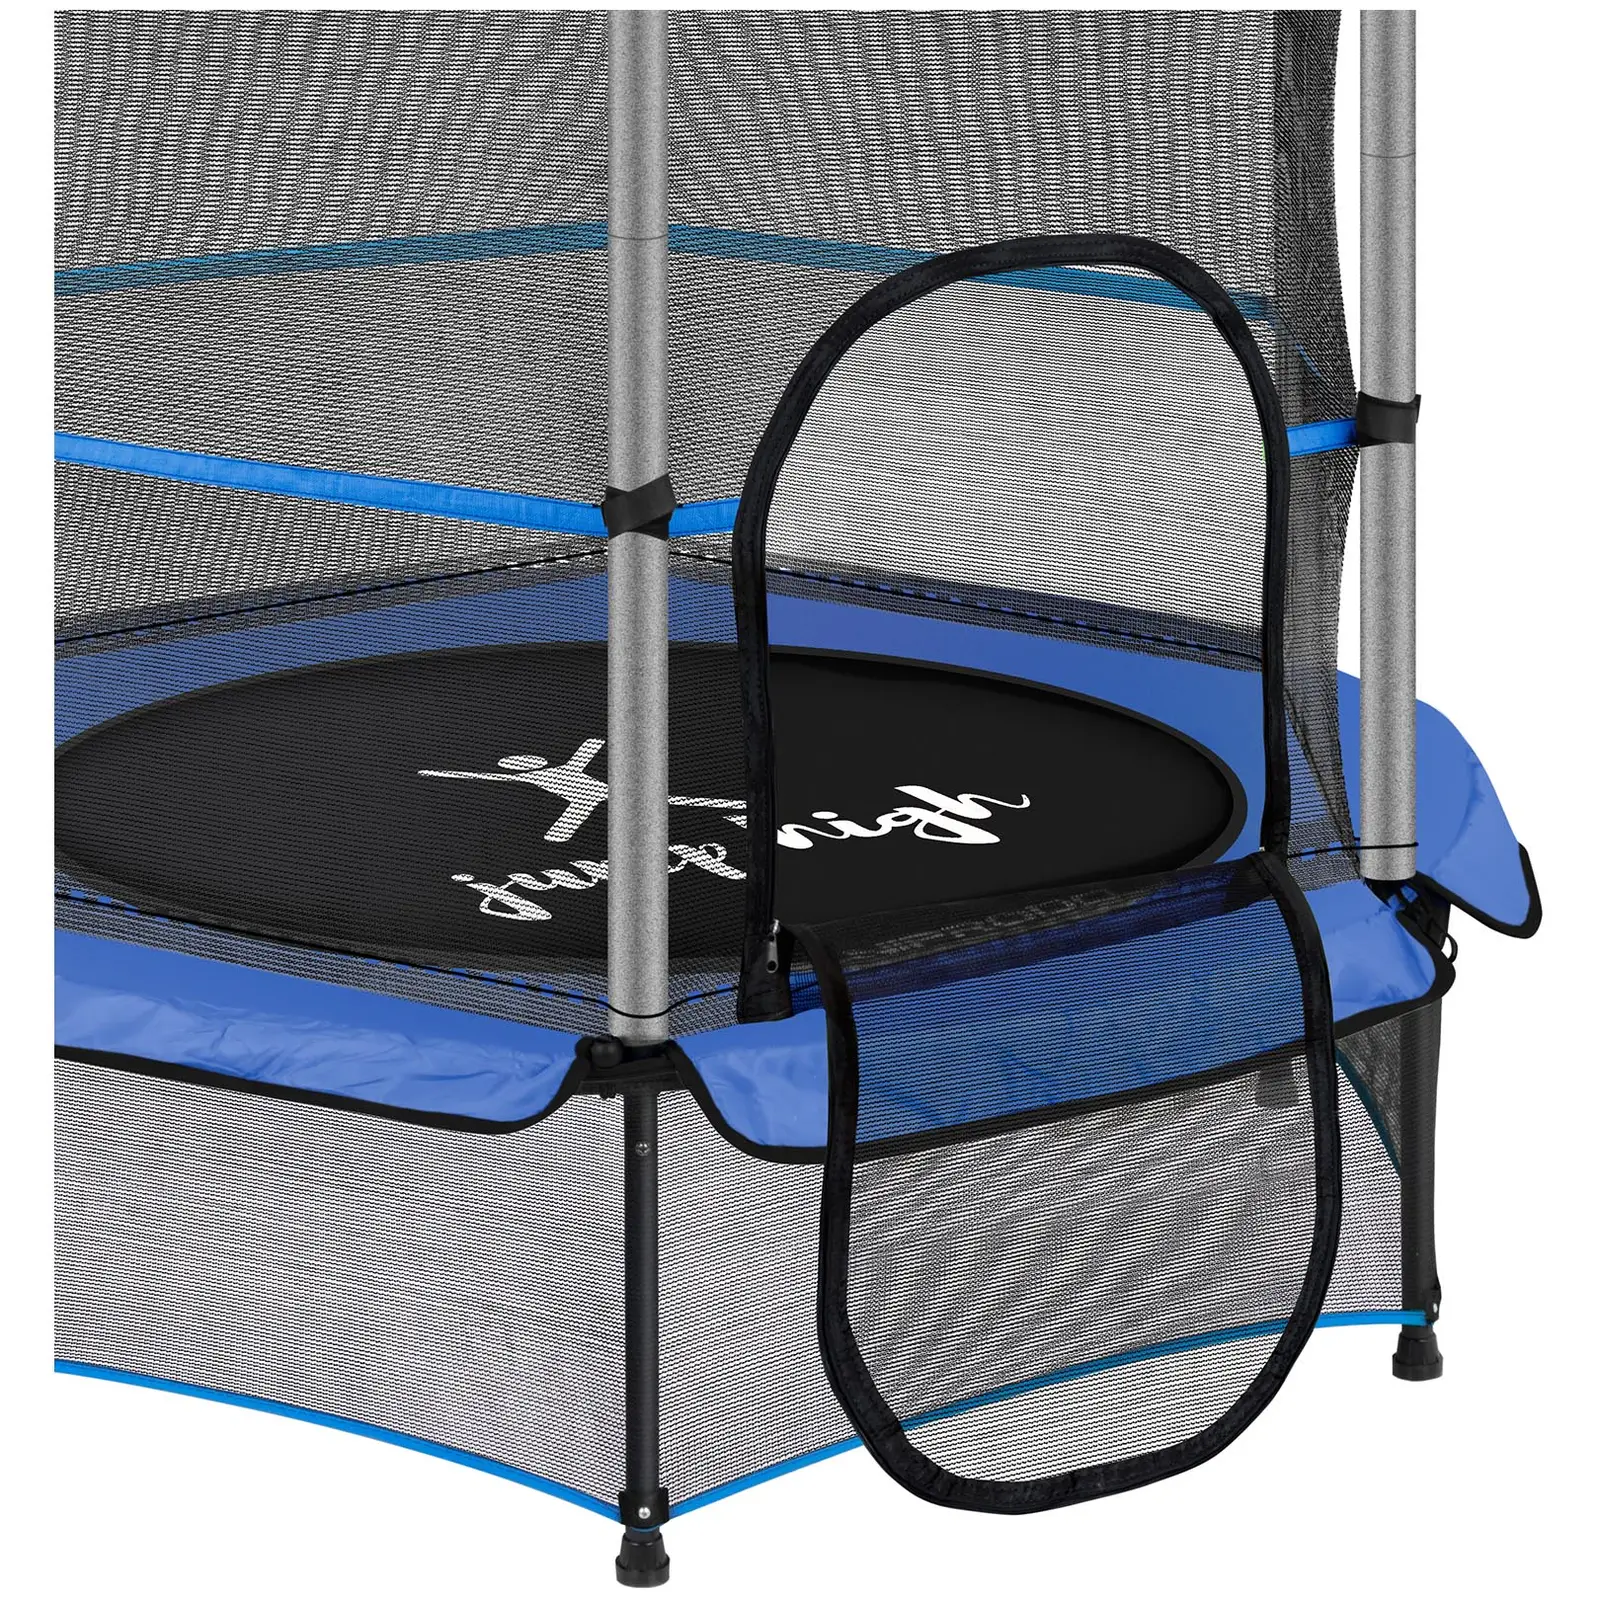 Kid's Trampoline - with safety net - 140 cm - 80 kg - blue